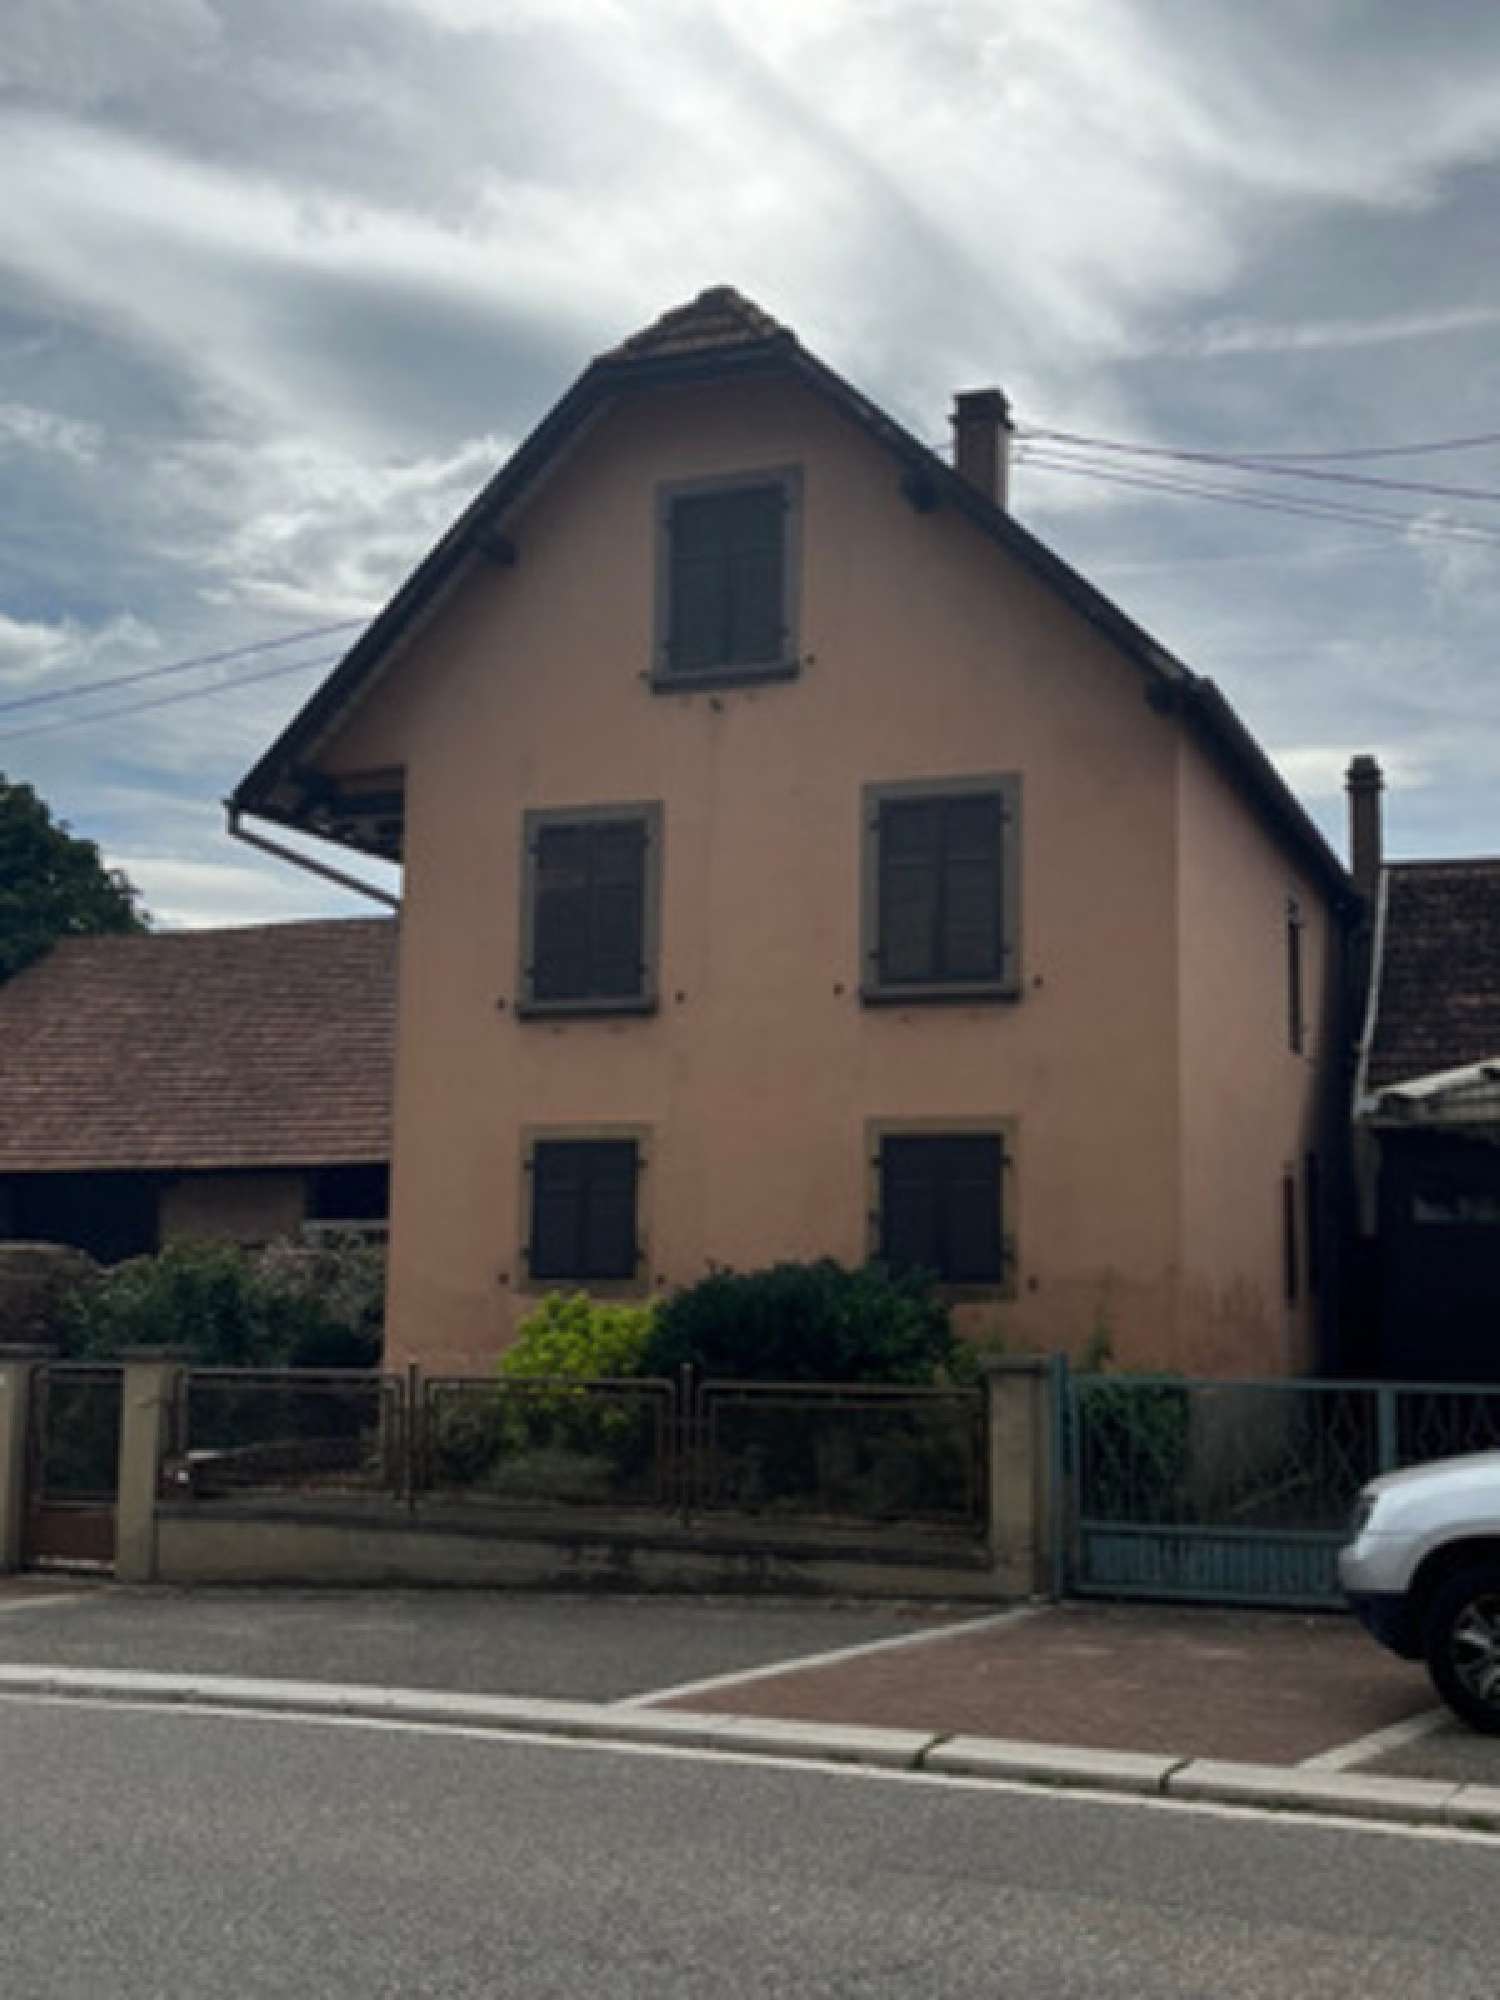  à vendre maison Ergersheim Bas-Rhin 3